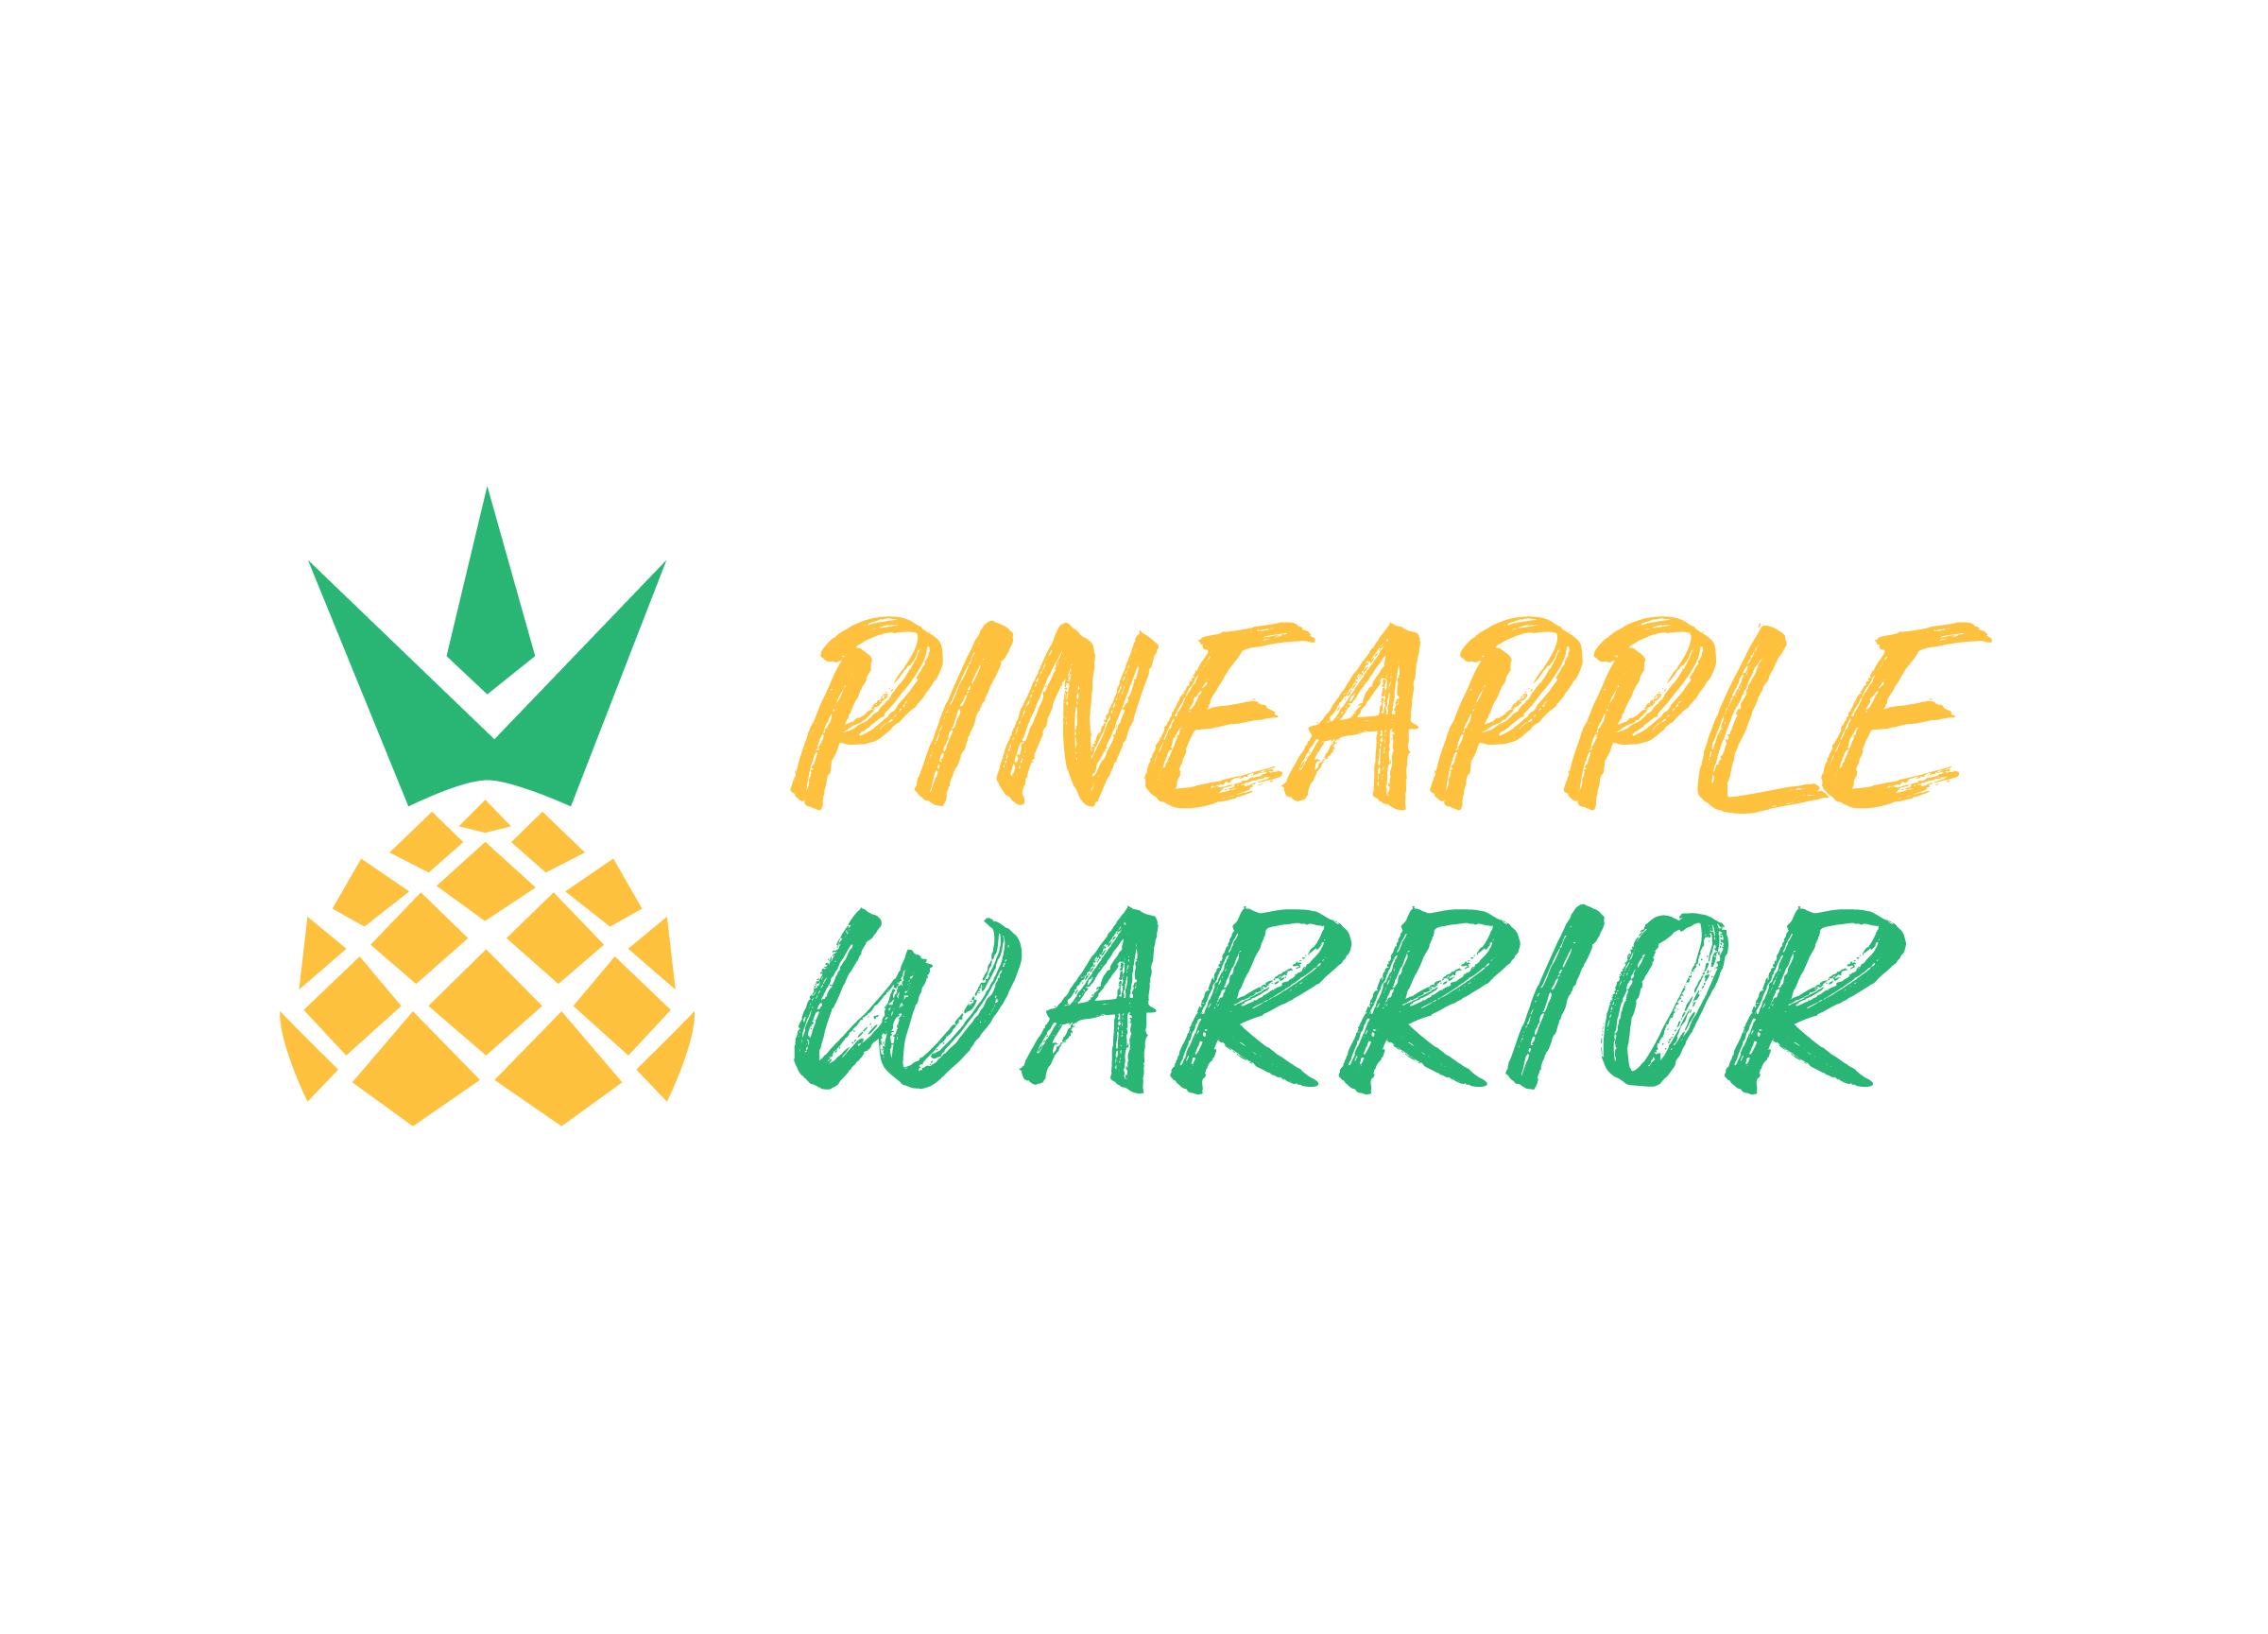 Pineapple Warrior